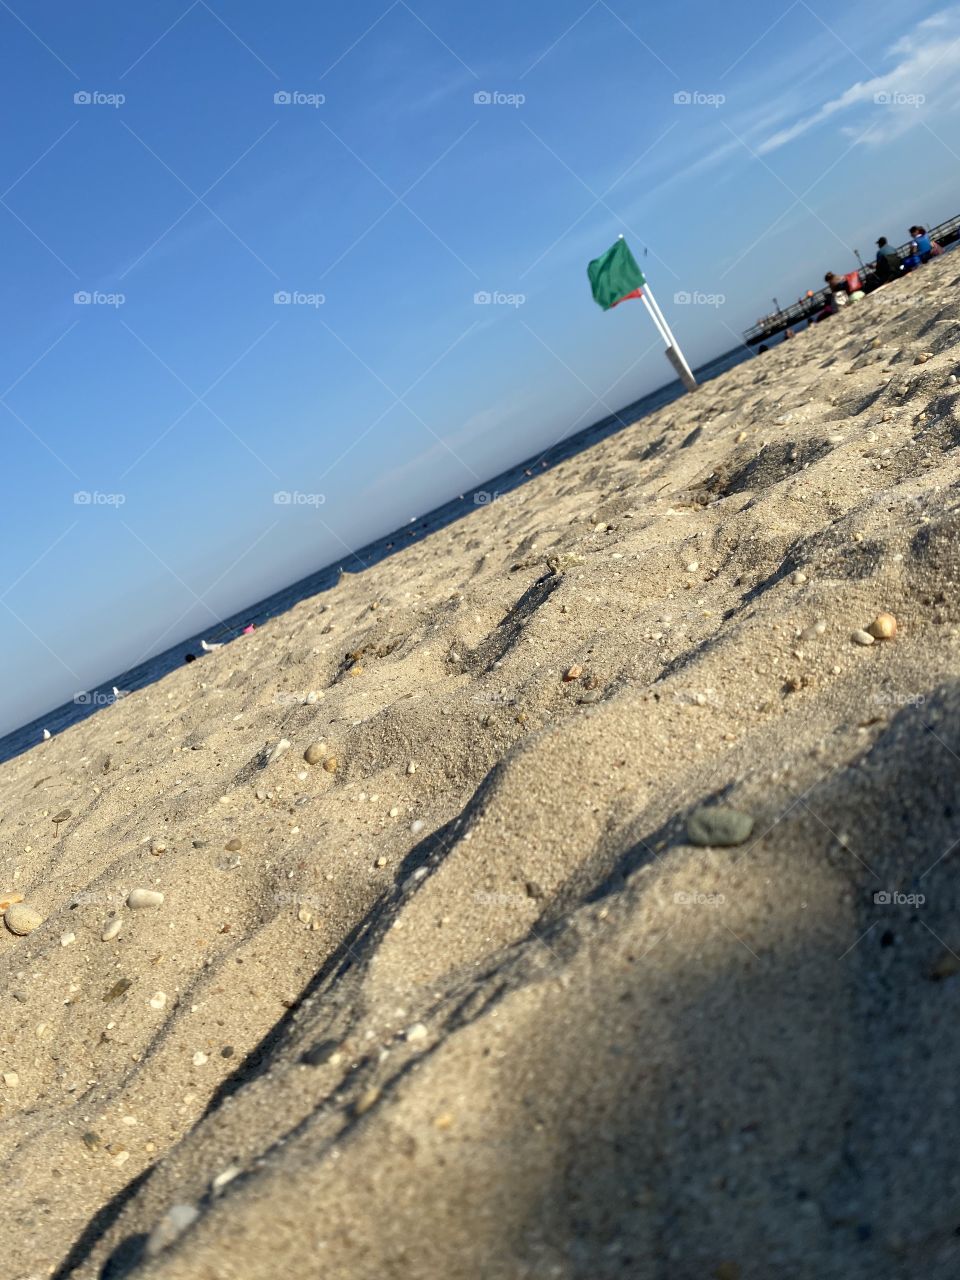 Beach with green flag